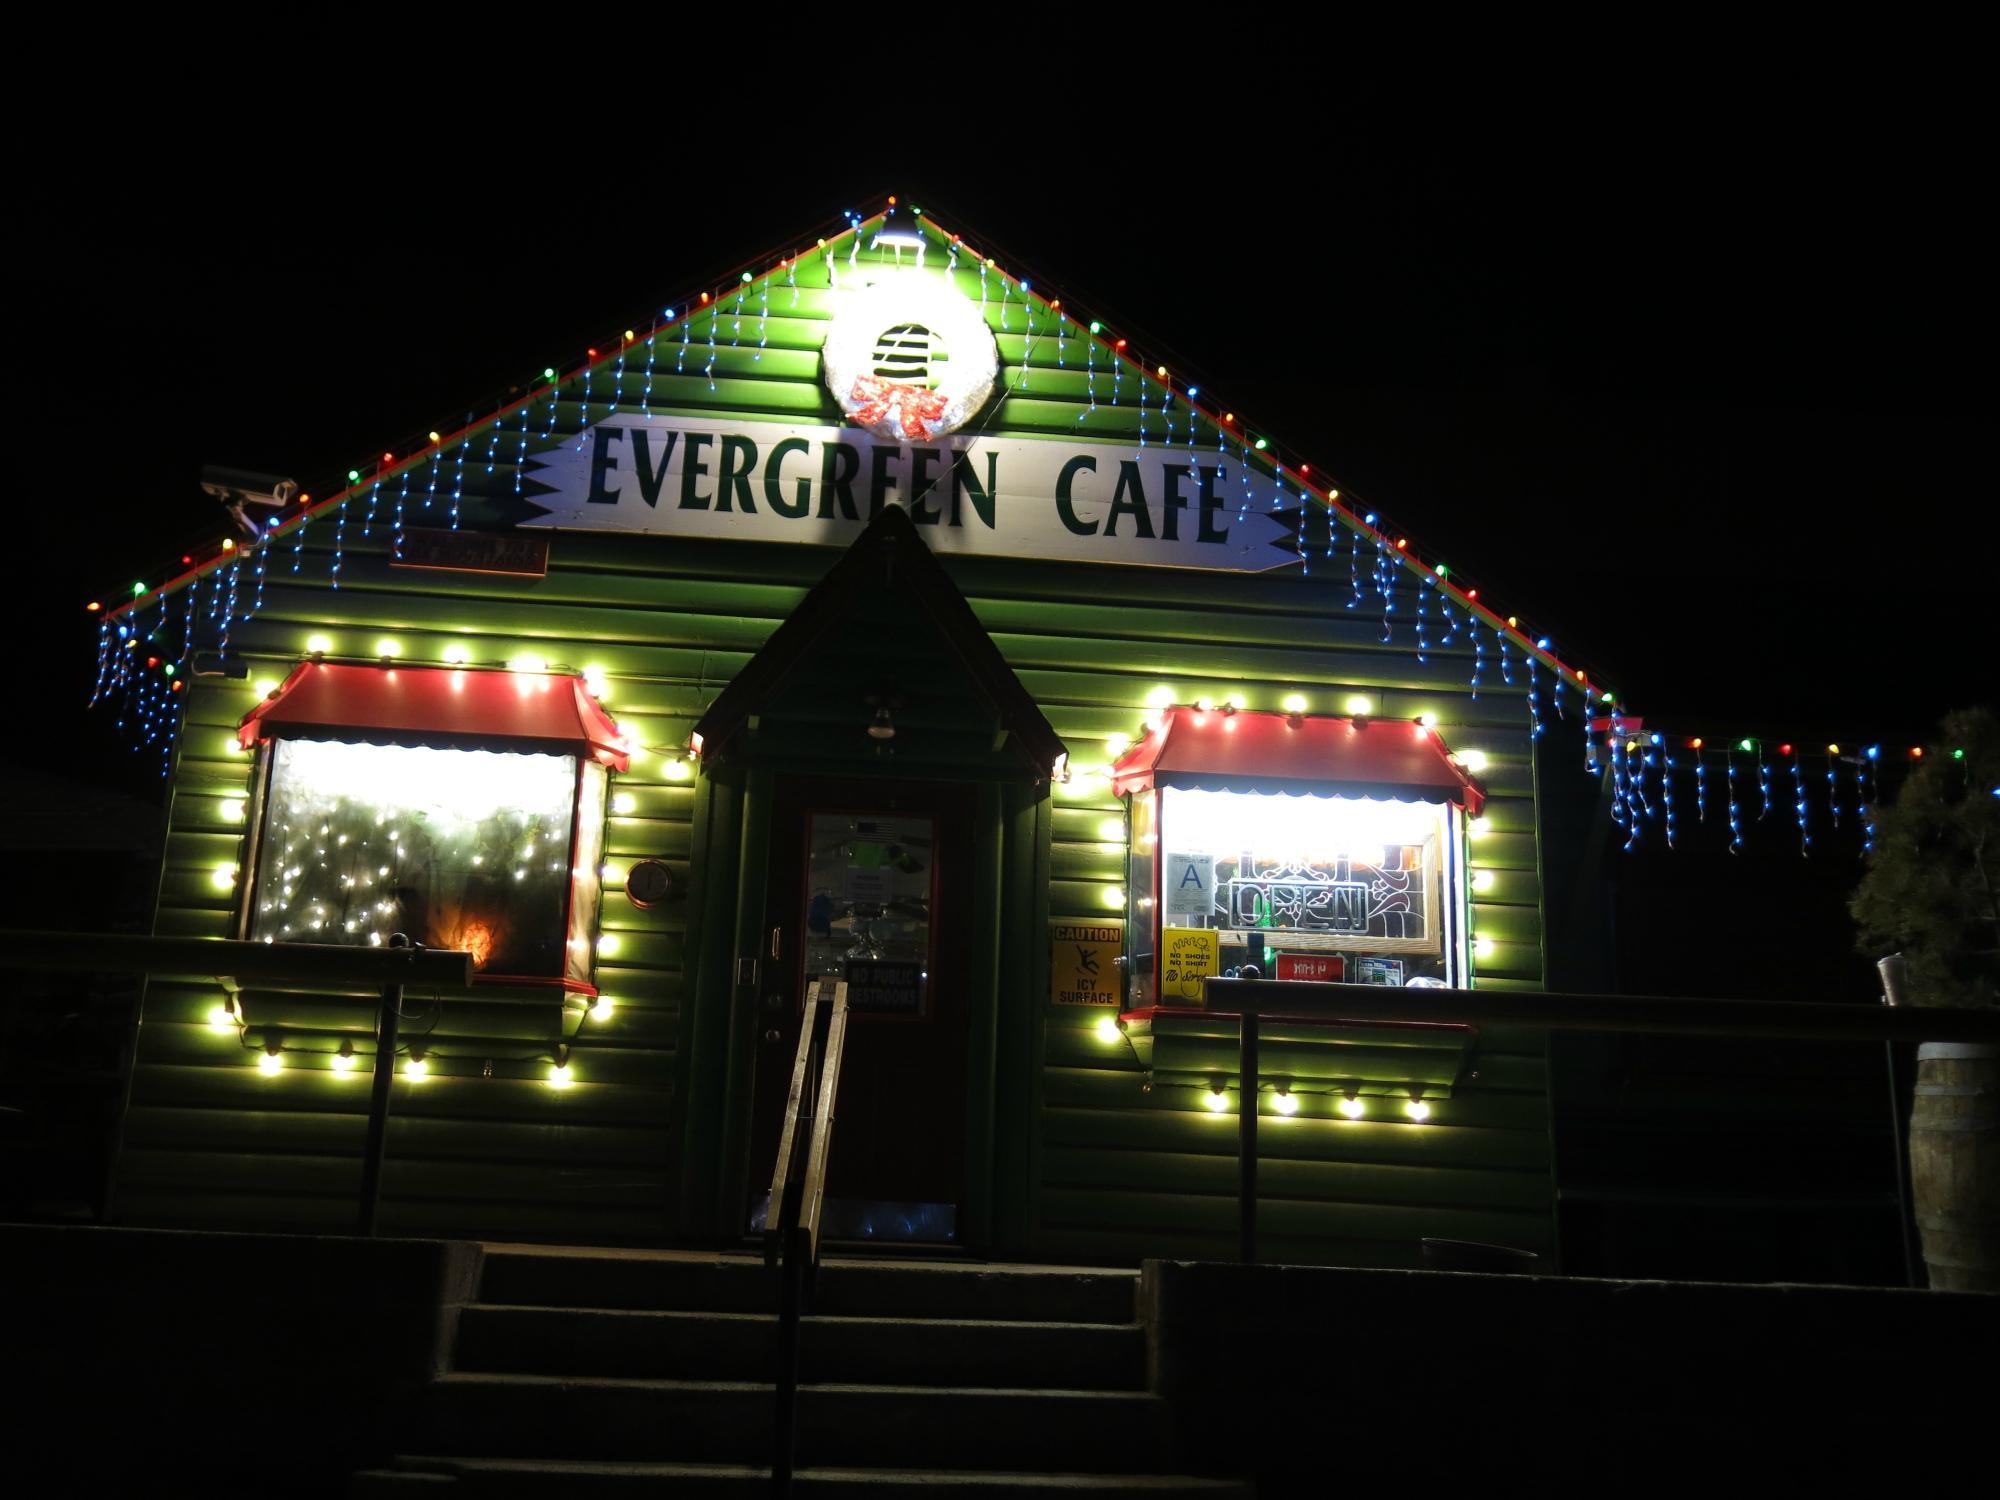 Evergreen Cafe & Racoon Saloon